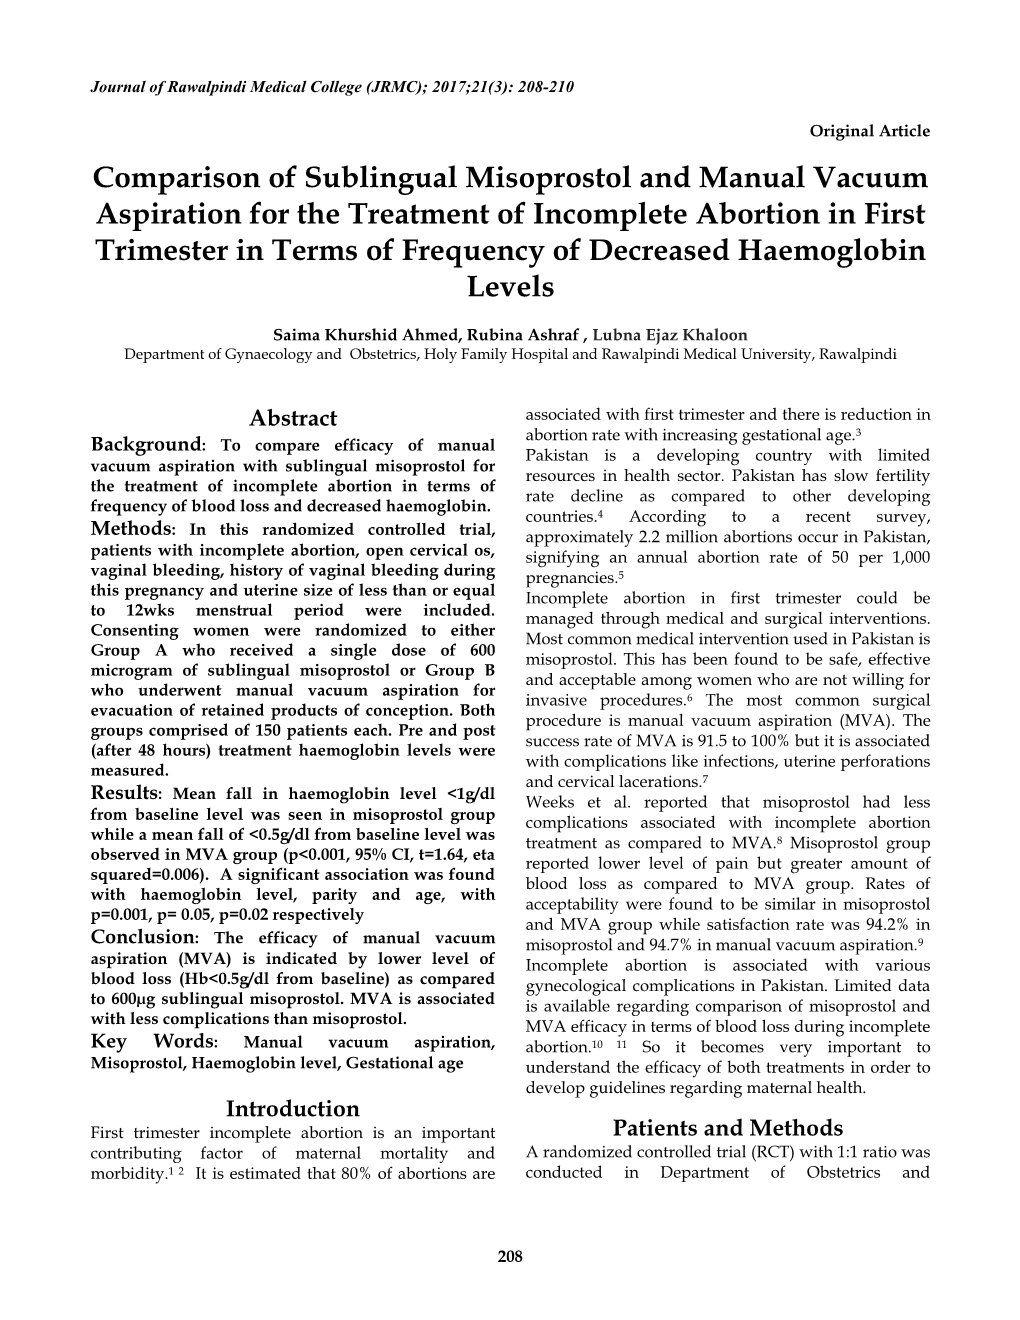 Comparison of Sublingual Misoprostol and Manual Vacuum Aspiration For